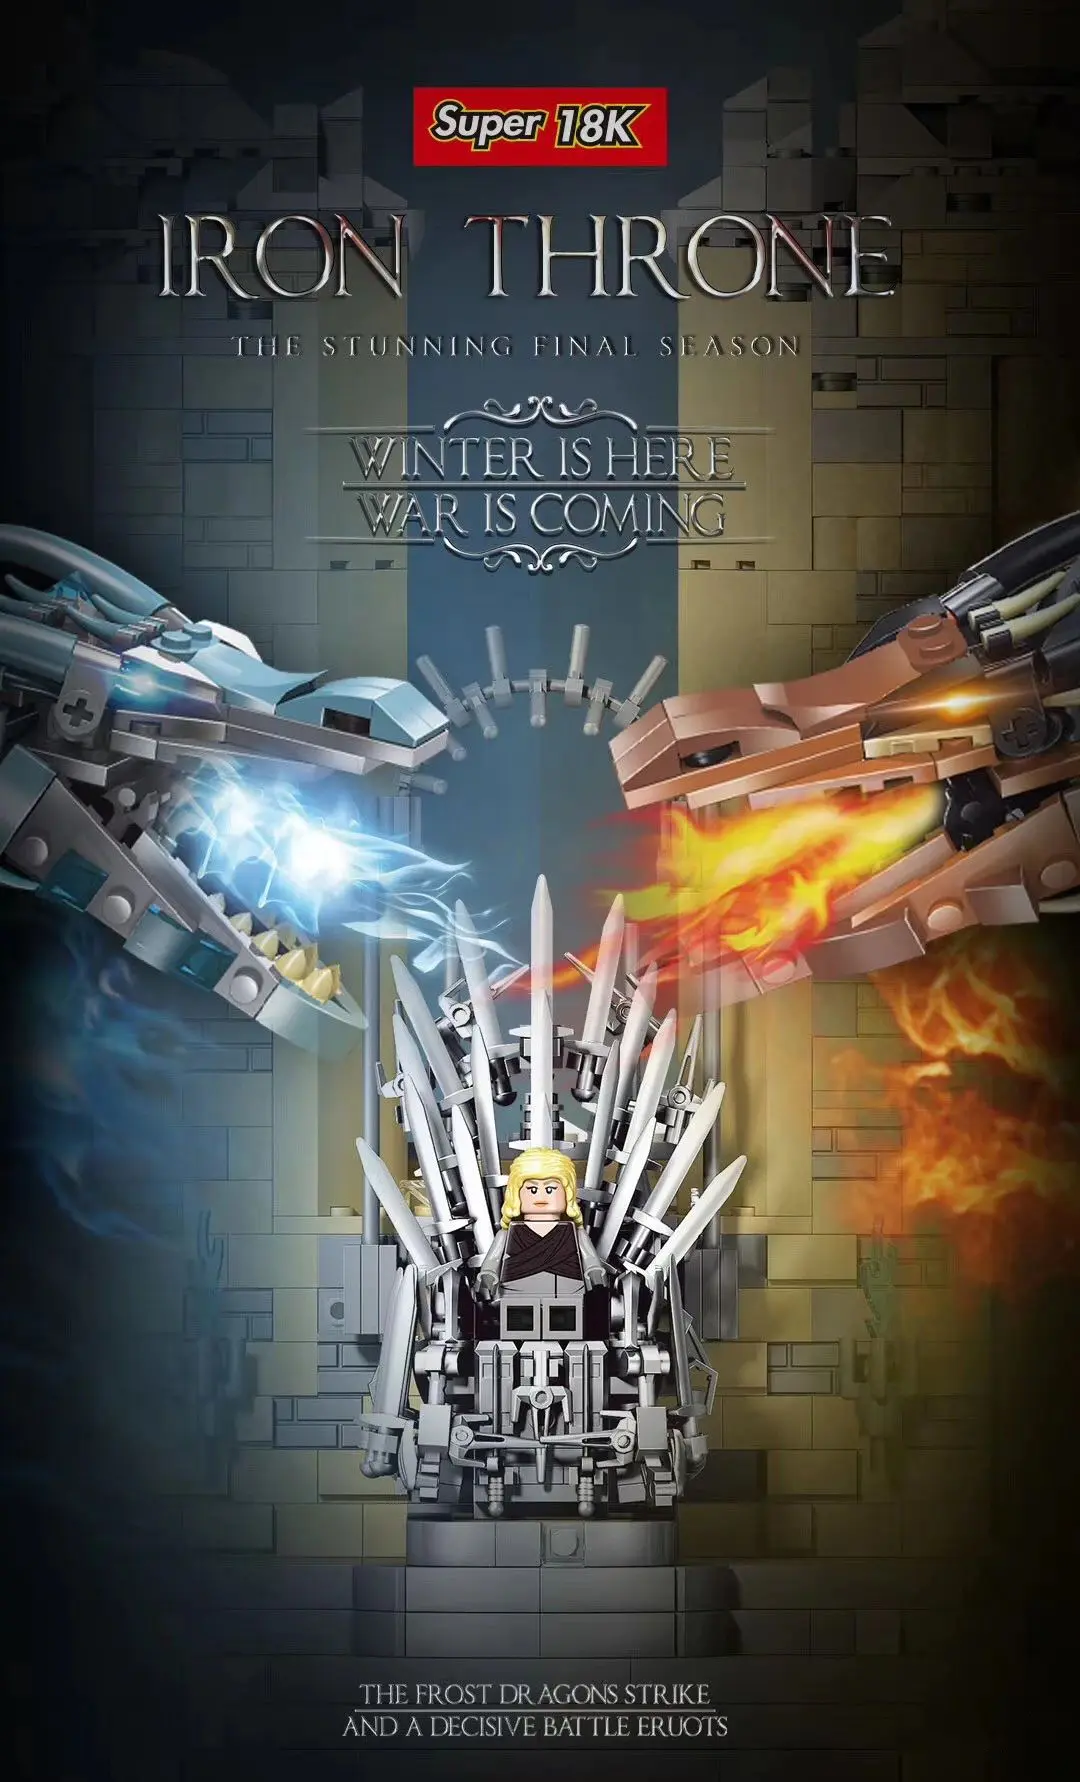 Super 18K K130 Game of Thrones Iron Throne (Железный трон из Игор престола)